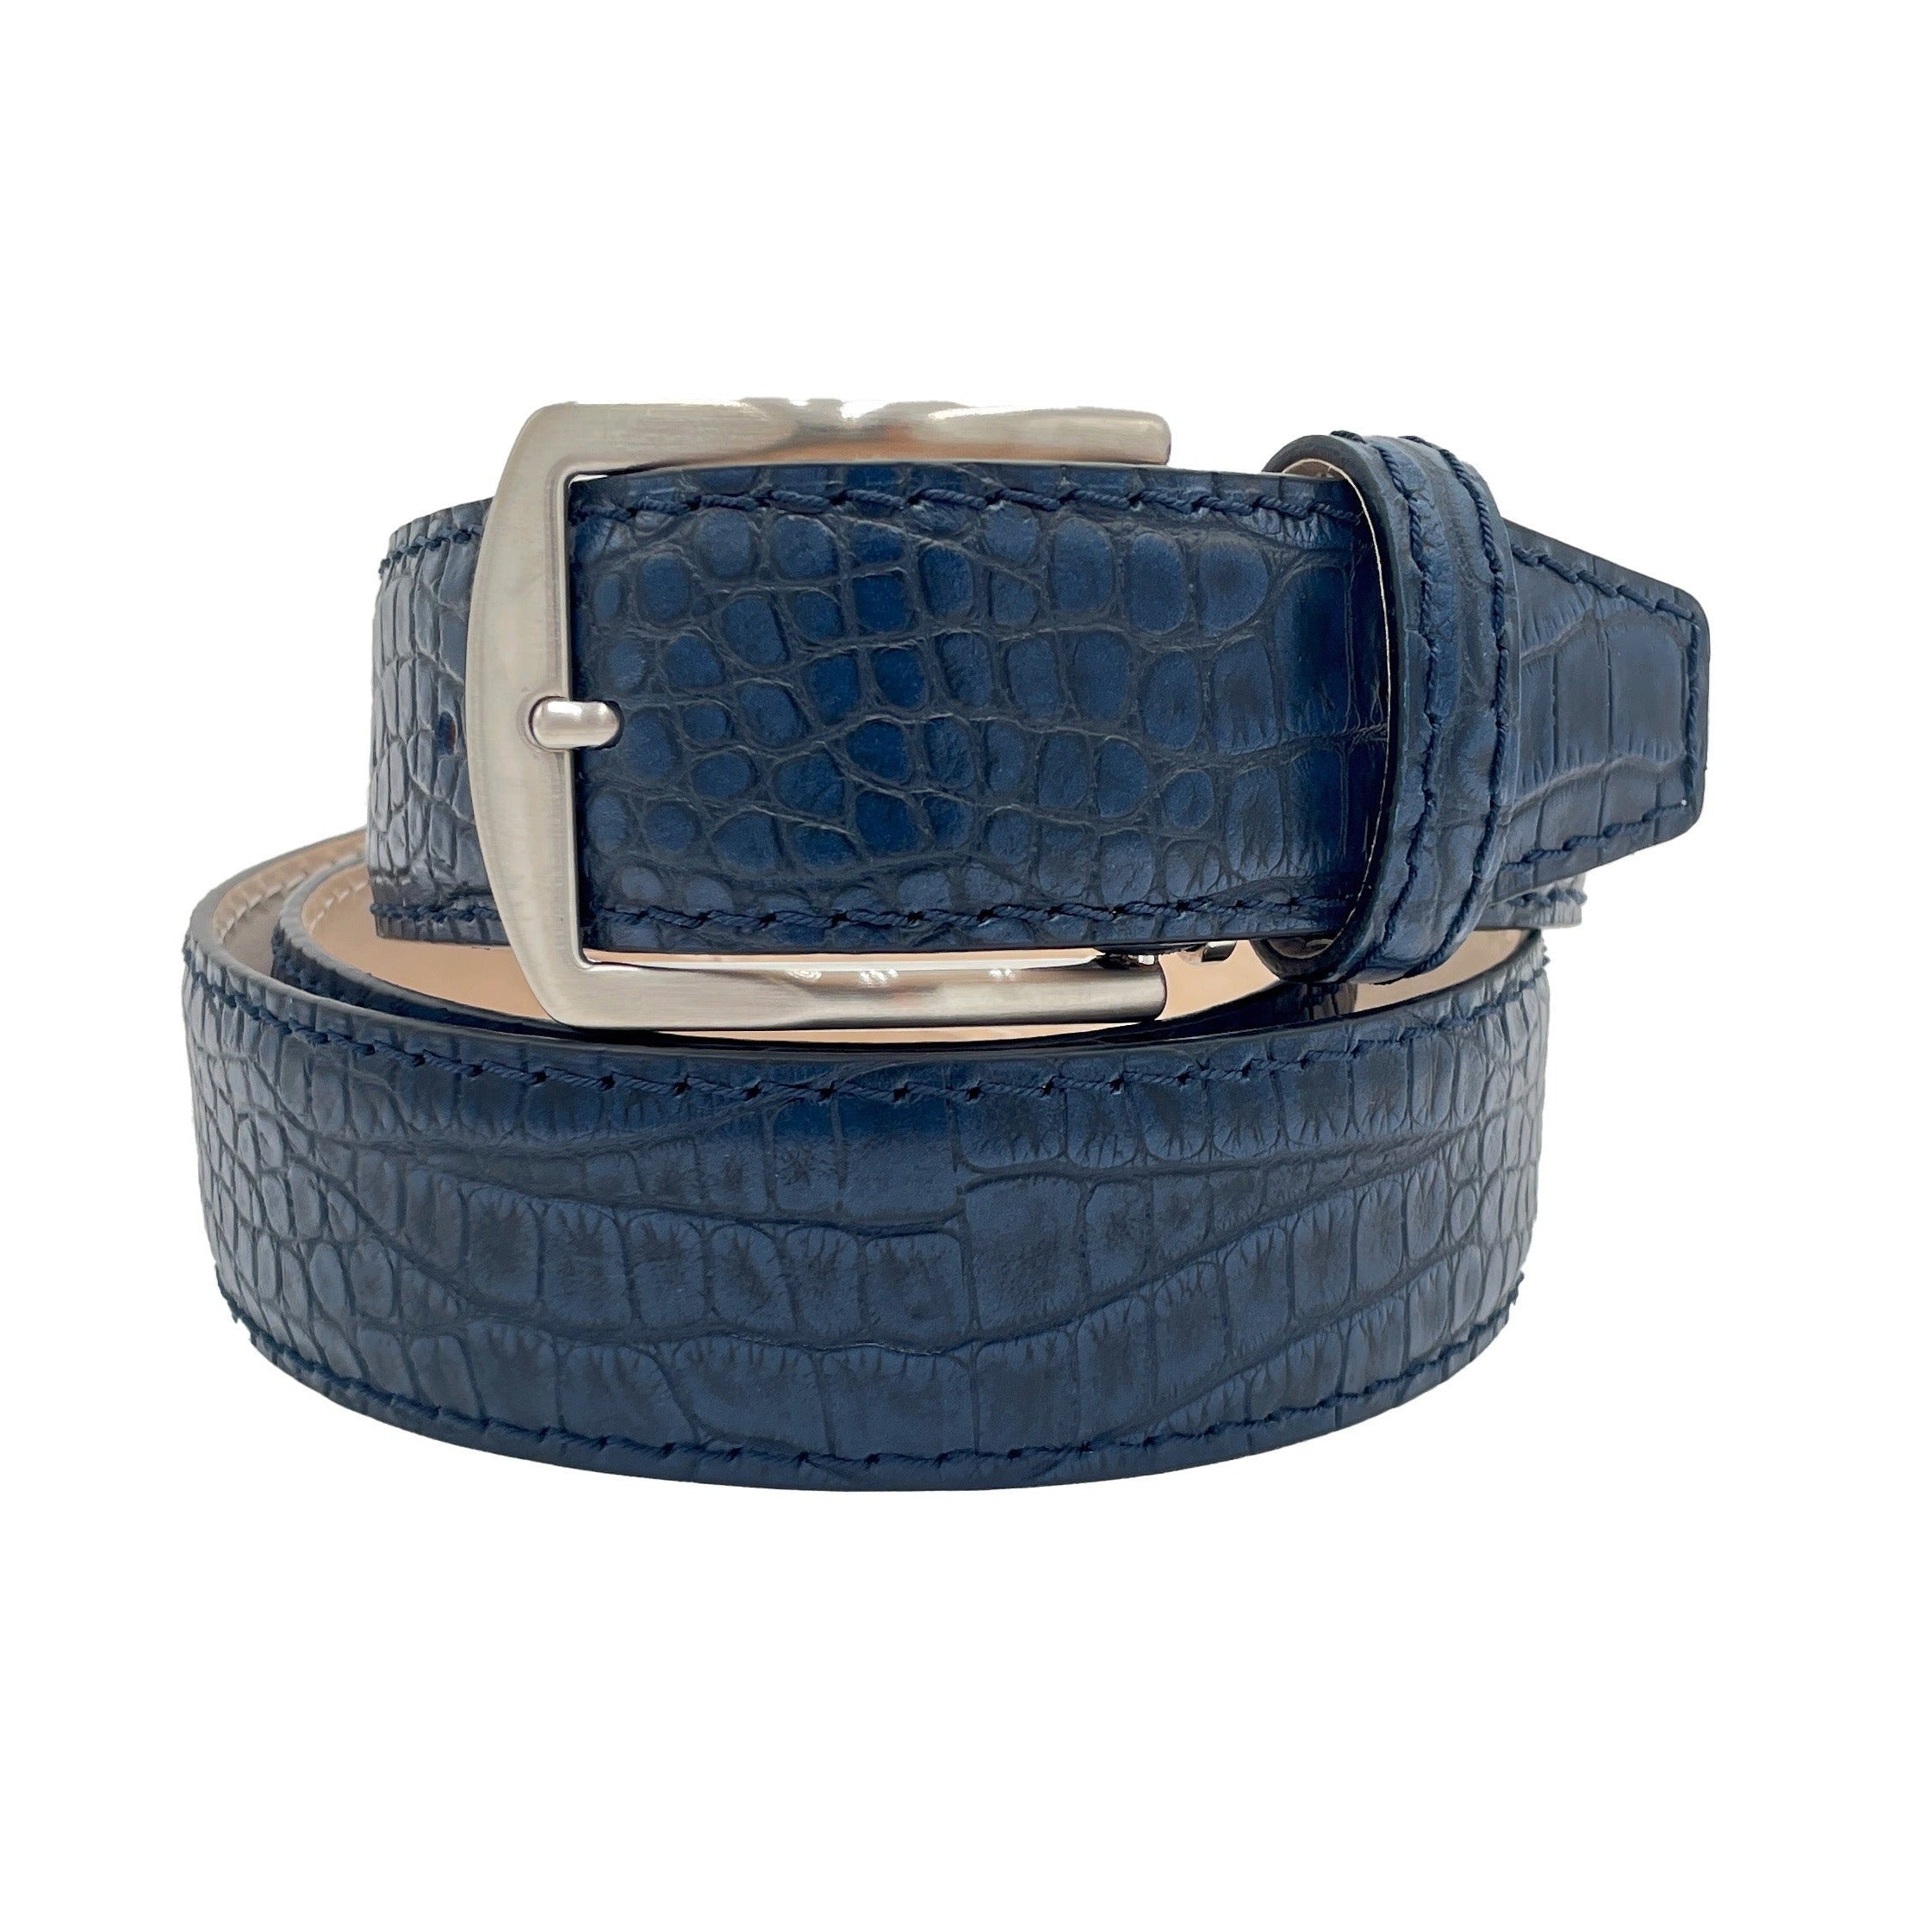 Buy Royal Blue Belt Strap For Buckle - Real Leather 35 Mm